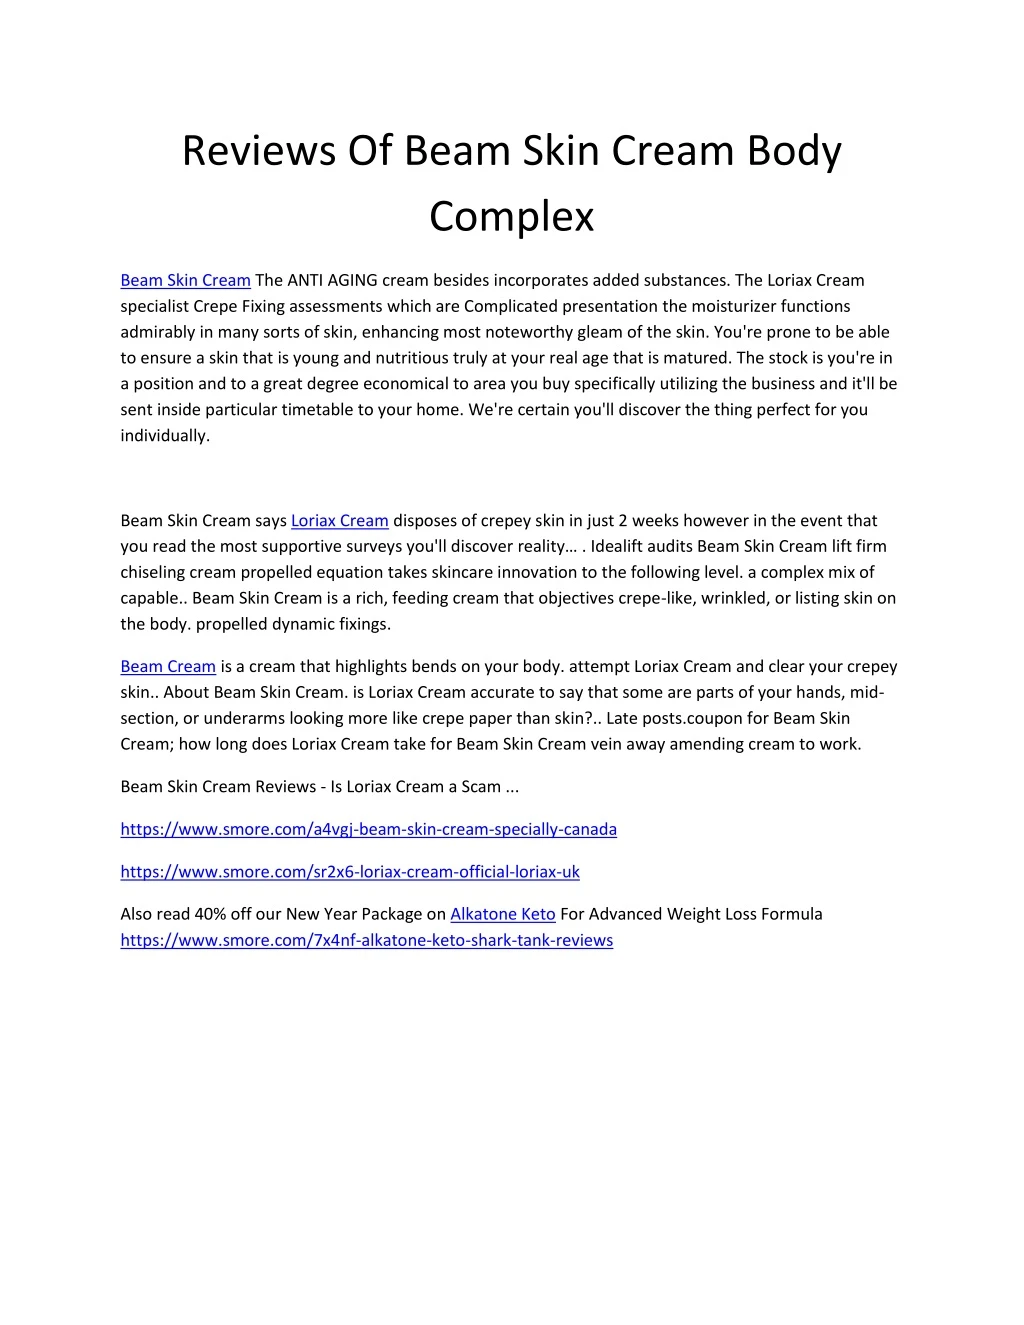 reviews of beam skin cream body complex n.